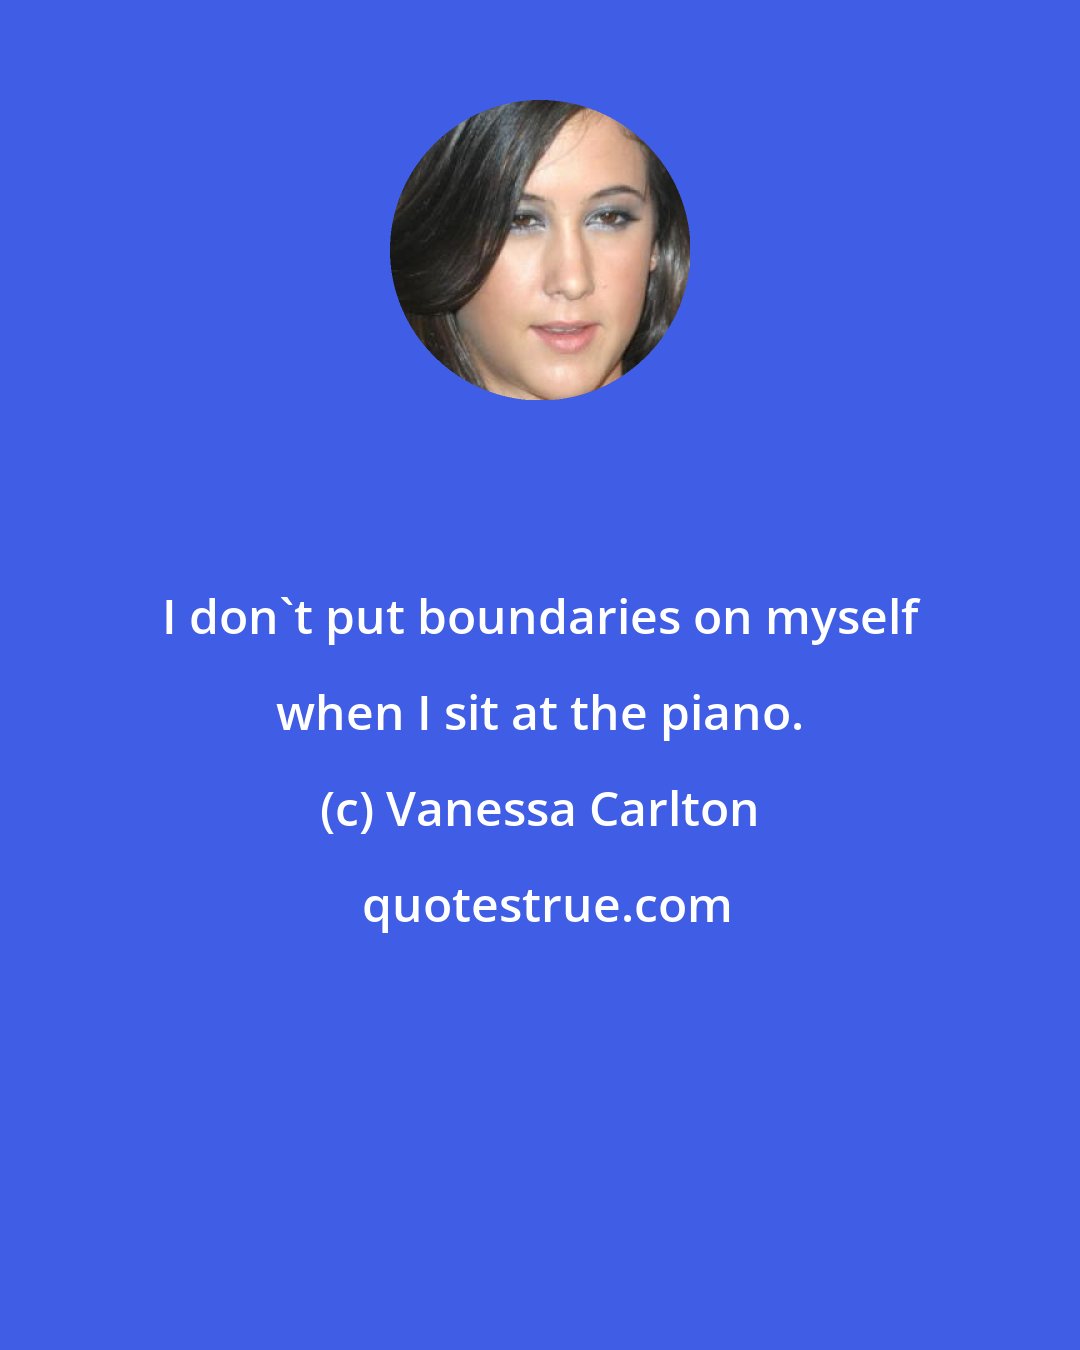 Vanessa Carlton: I don't put boundaries on myself when I sit at the piano.